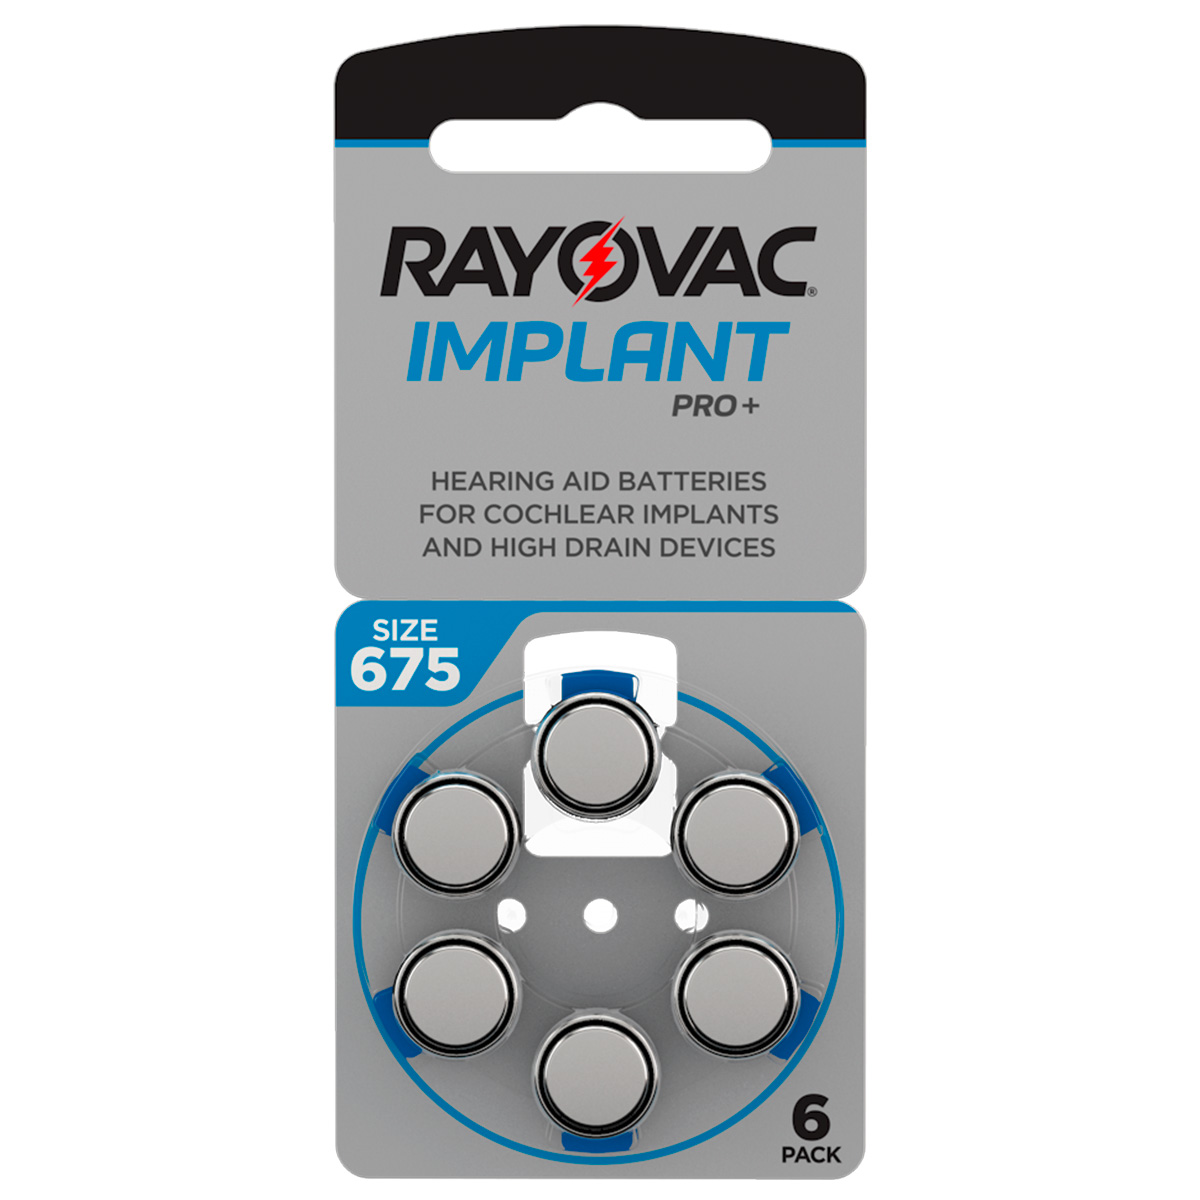 Rayovac Implant Pro+, 6 Hörgerätebatterien Nr. 675 für Cochlear Implantate, Blister